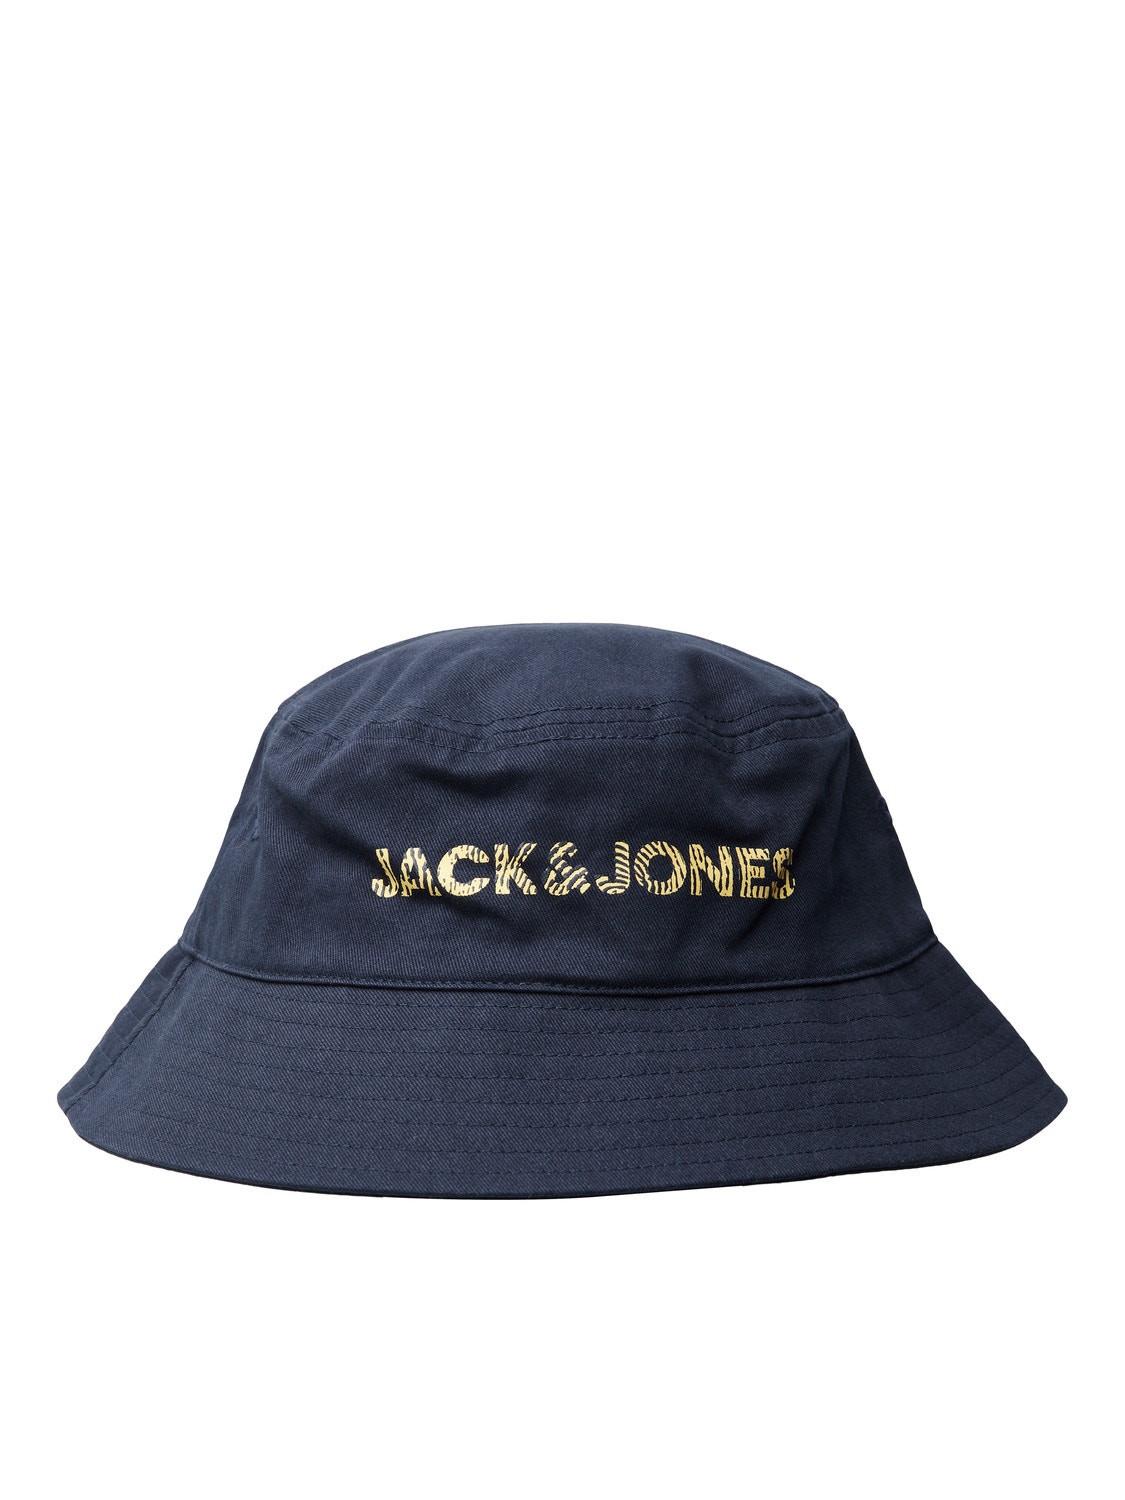 Jack & Jones Fischerhut -Navy Blazer - 12235410